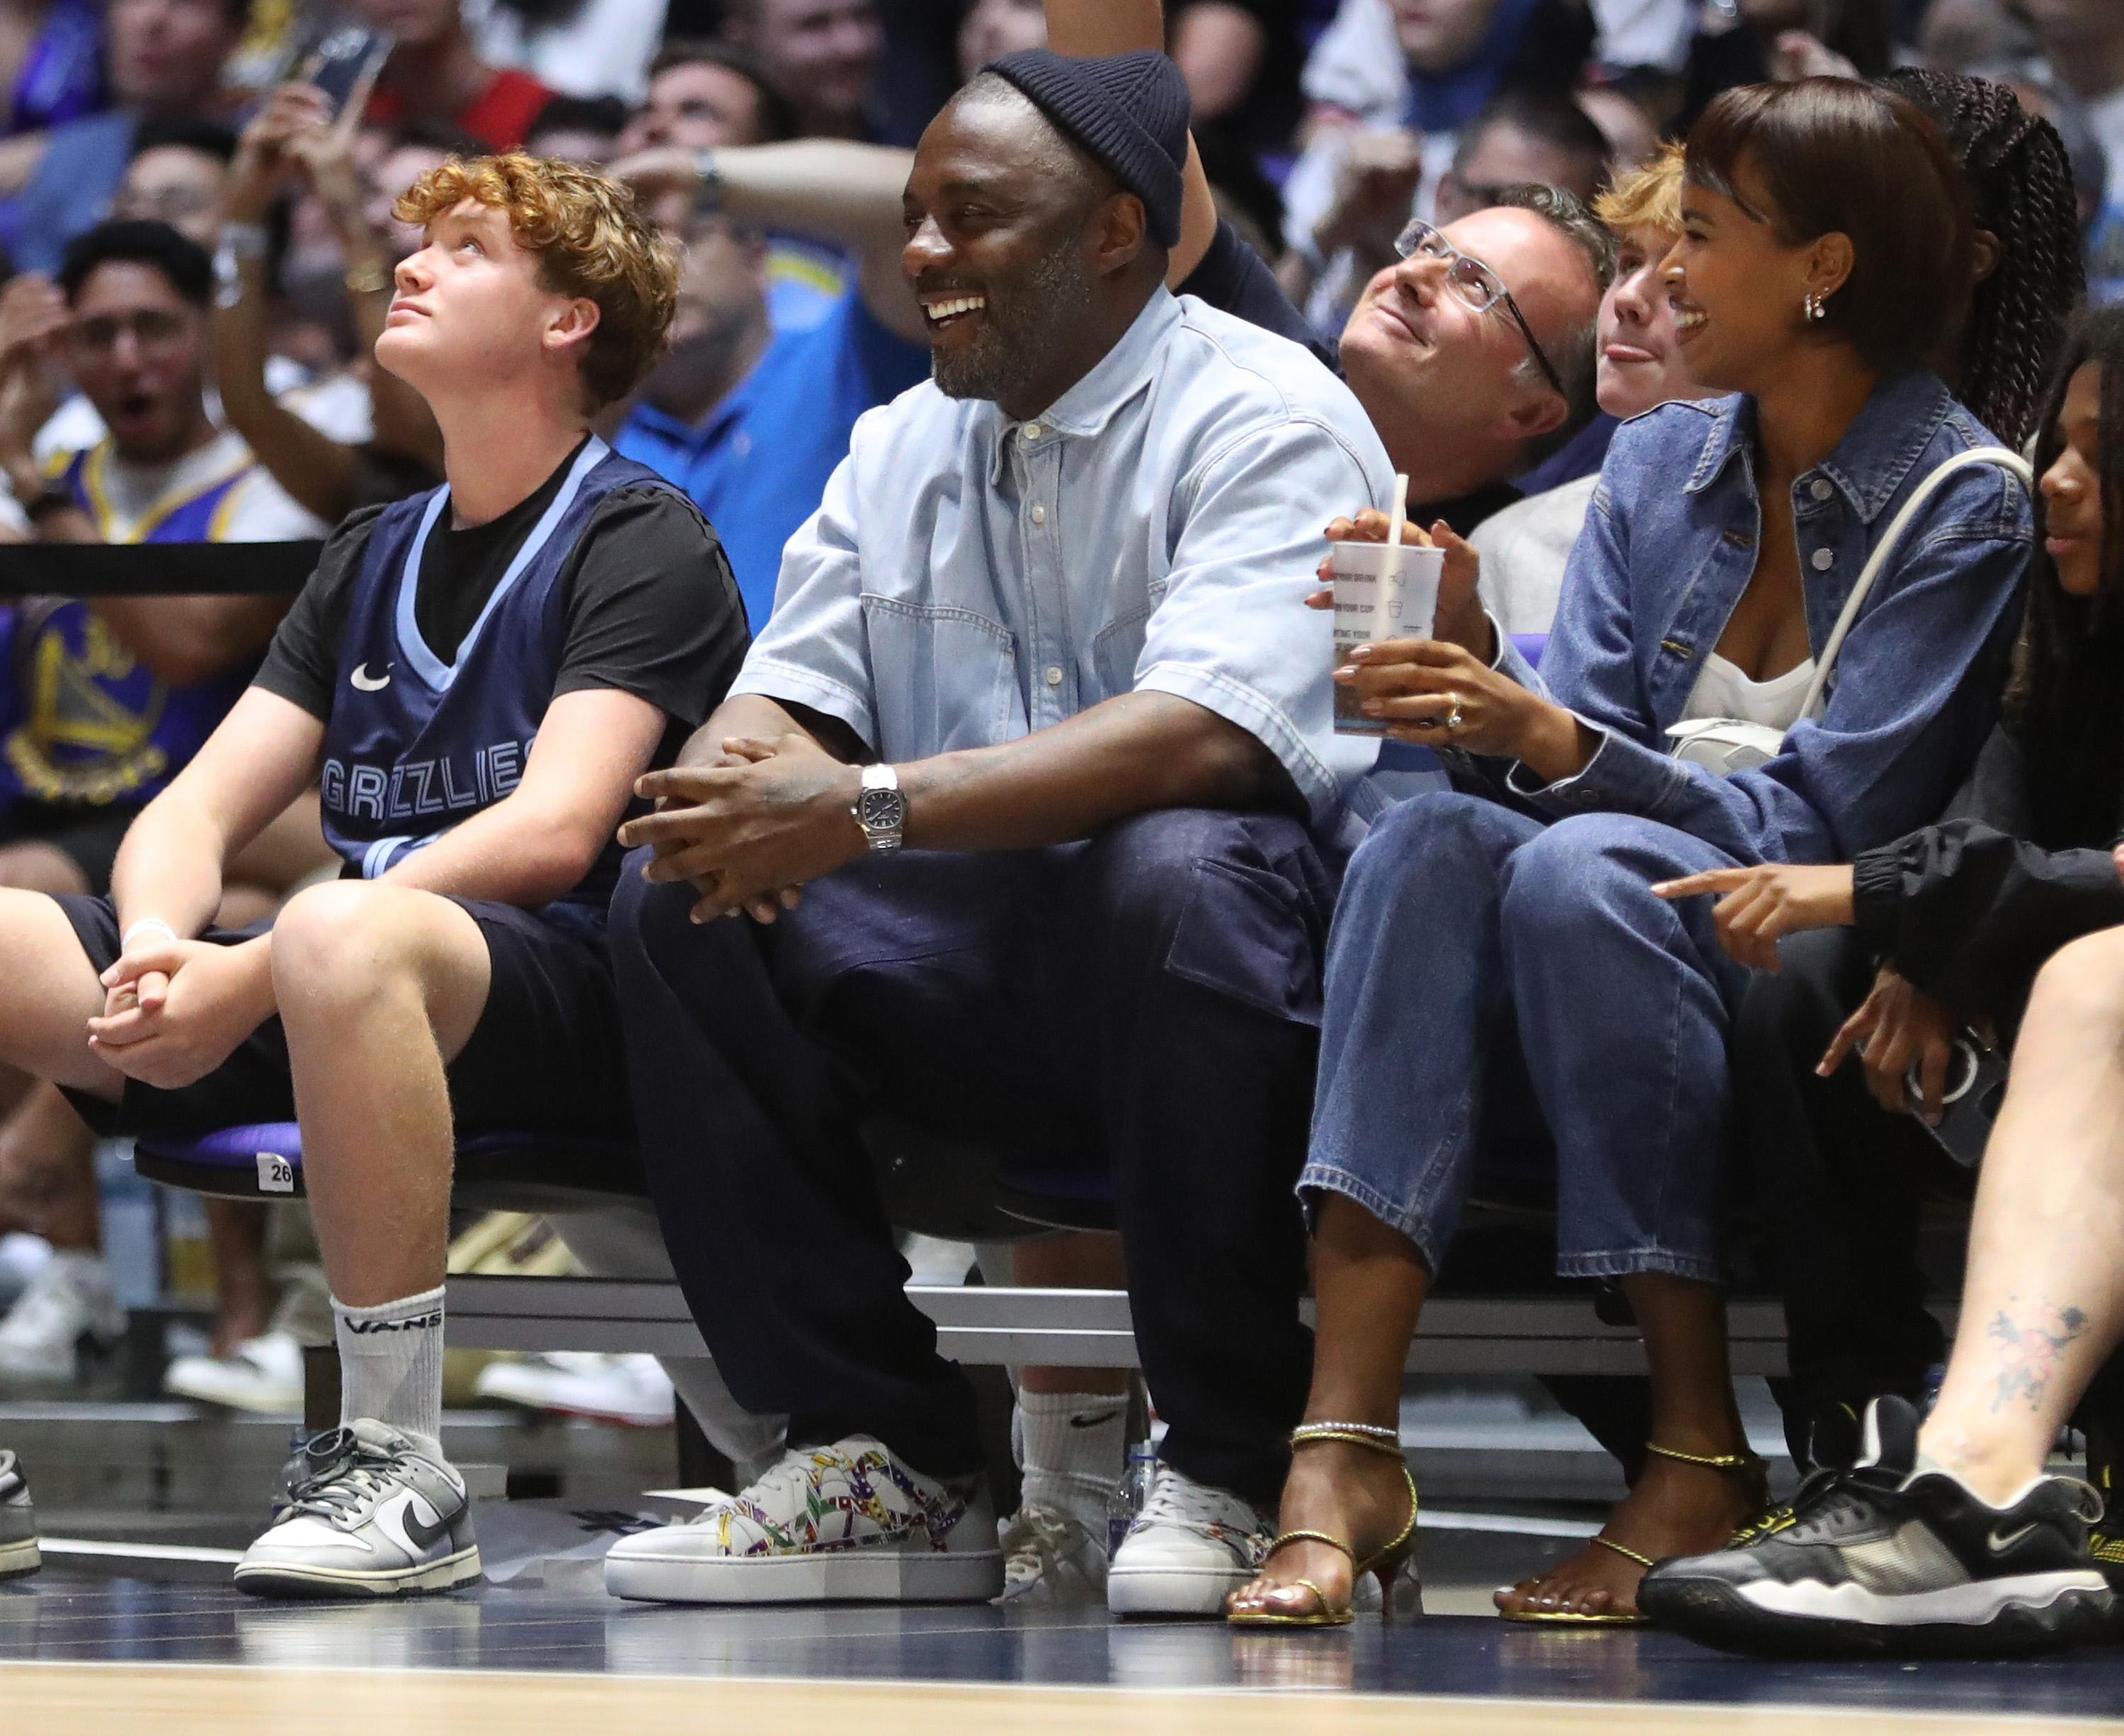 Actor Idris Elba laughs during the USA Basketball Showcase